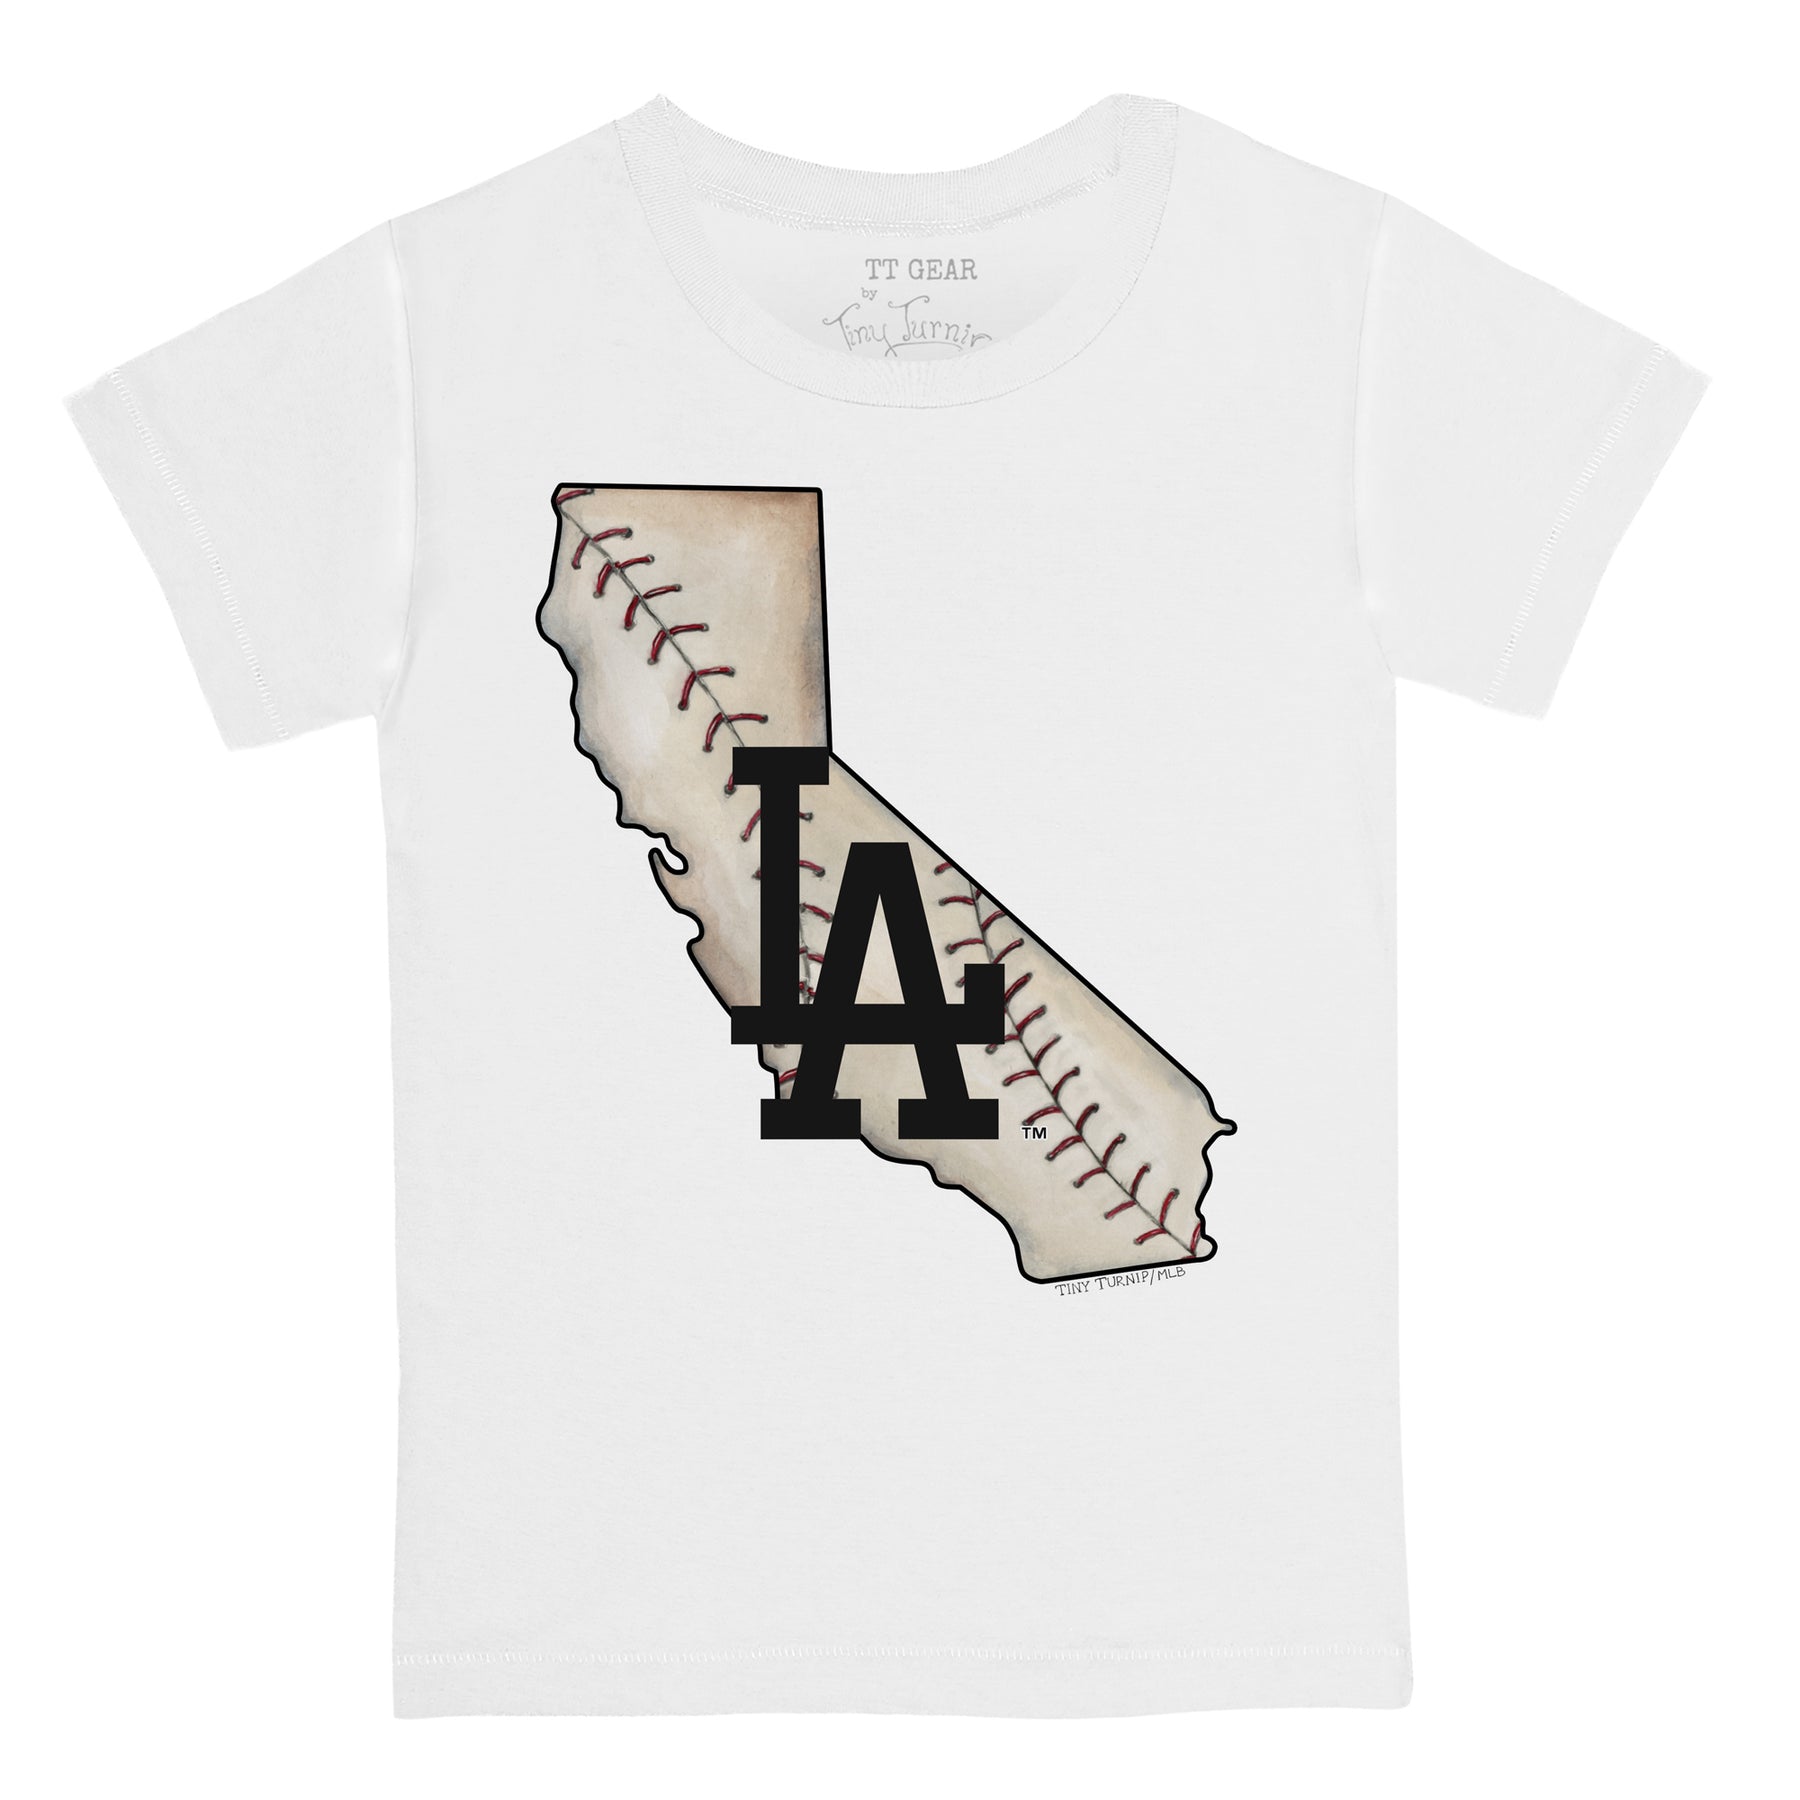 Los Angeles Dodgers Tiny Turnip Infant TT Rex T-Shirt - Royal